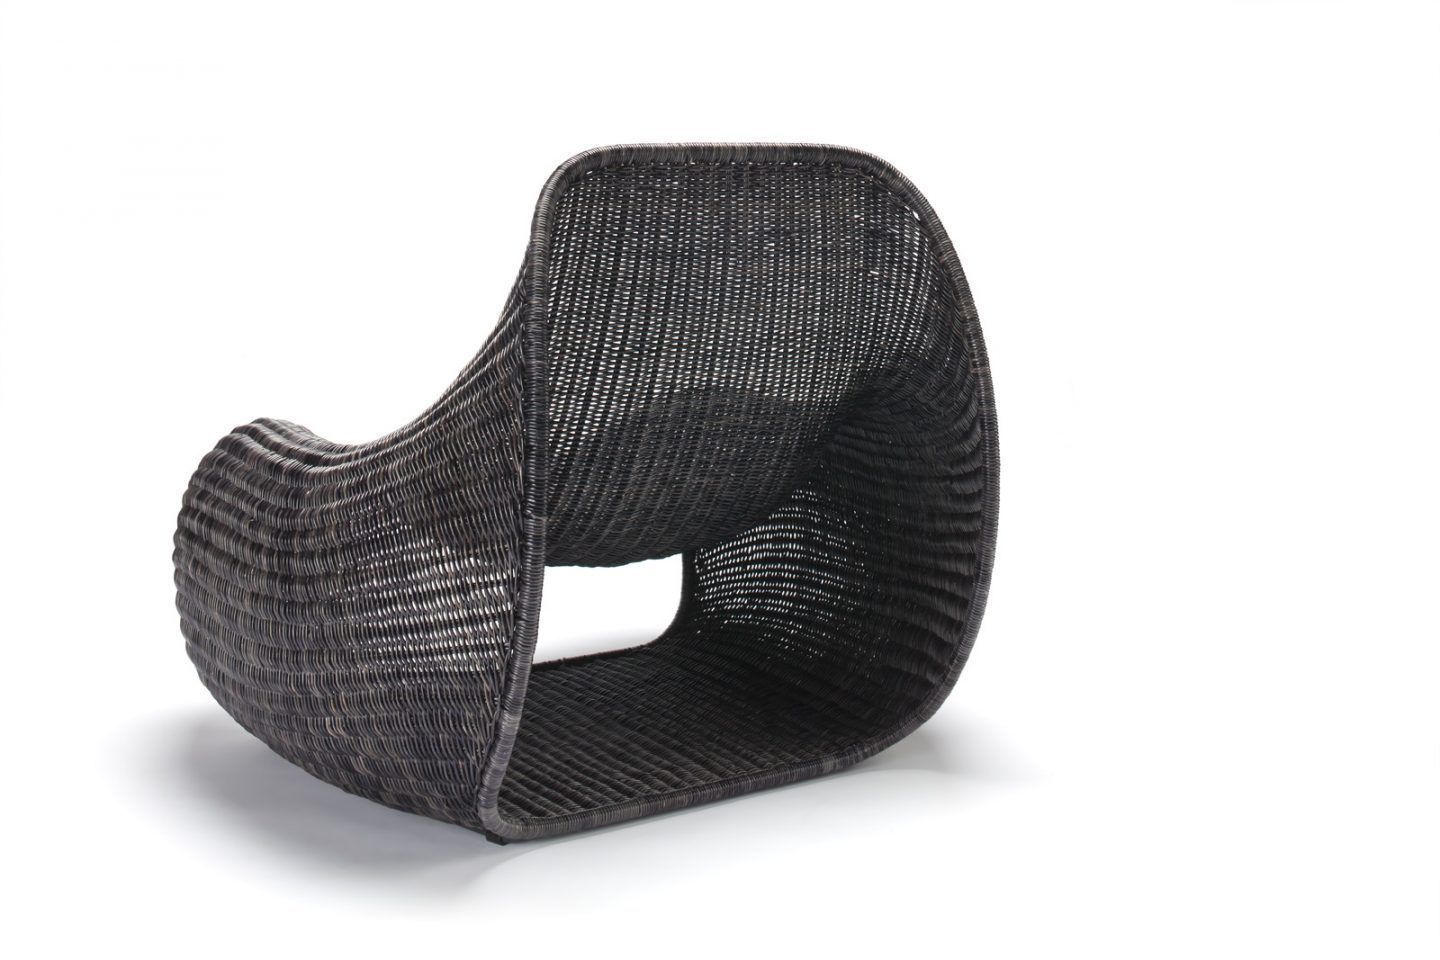 SNUG INDOOR chair by Feelgood Designs